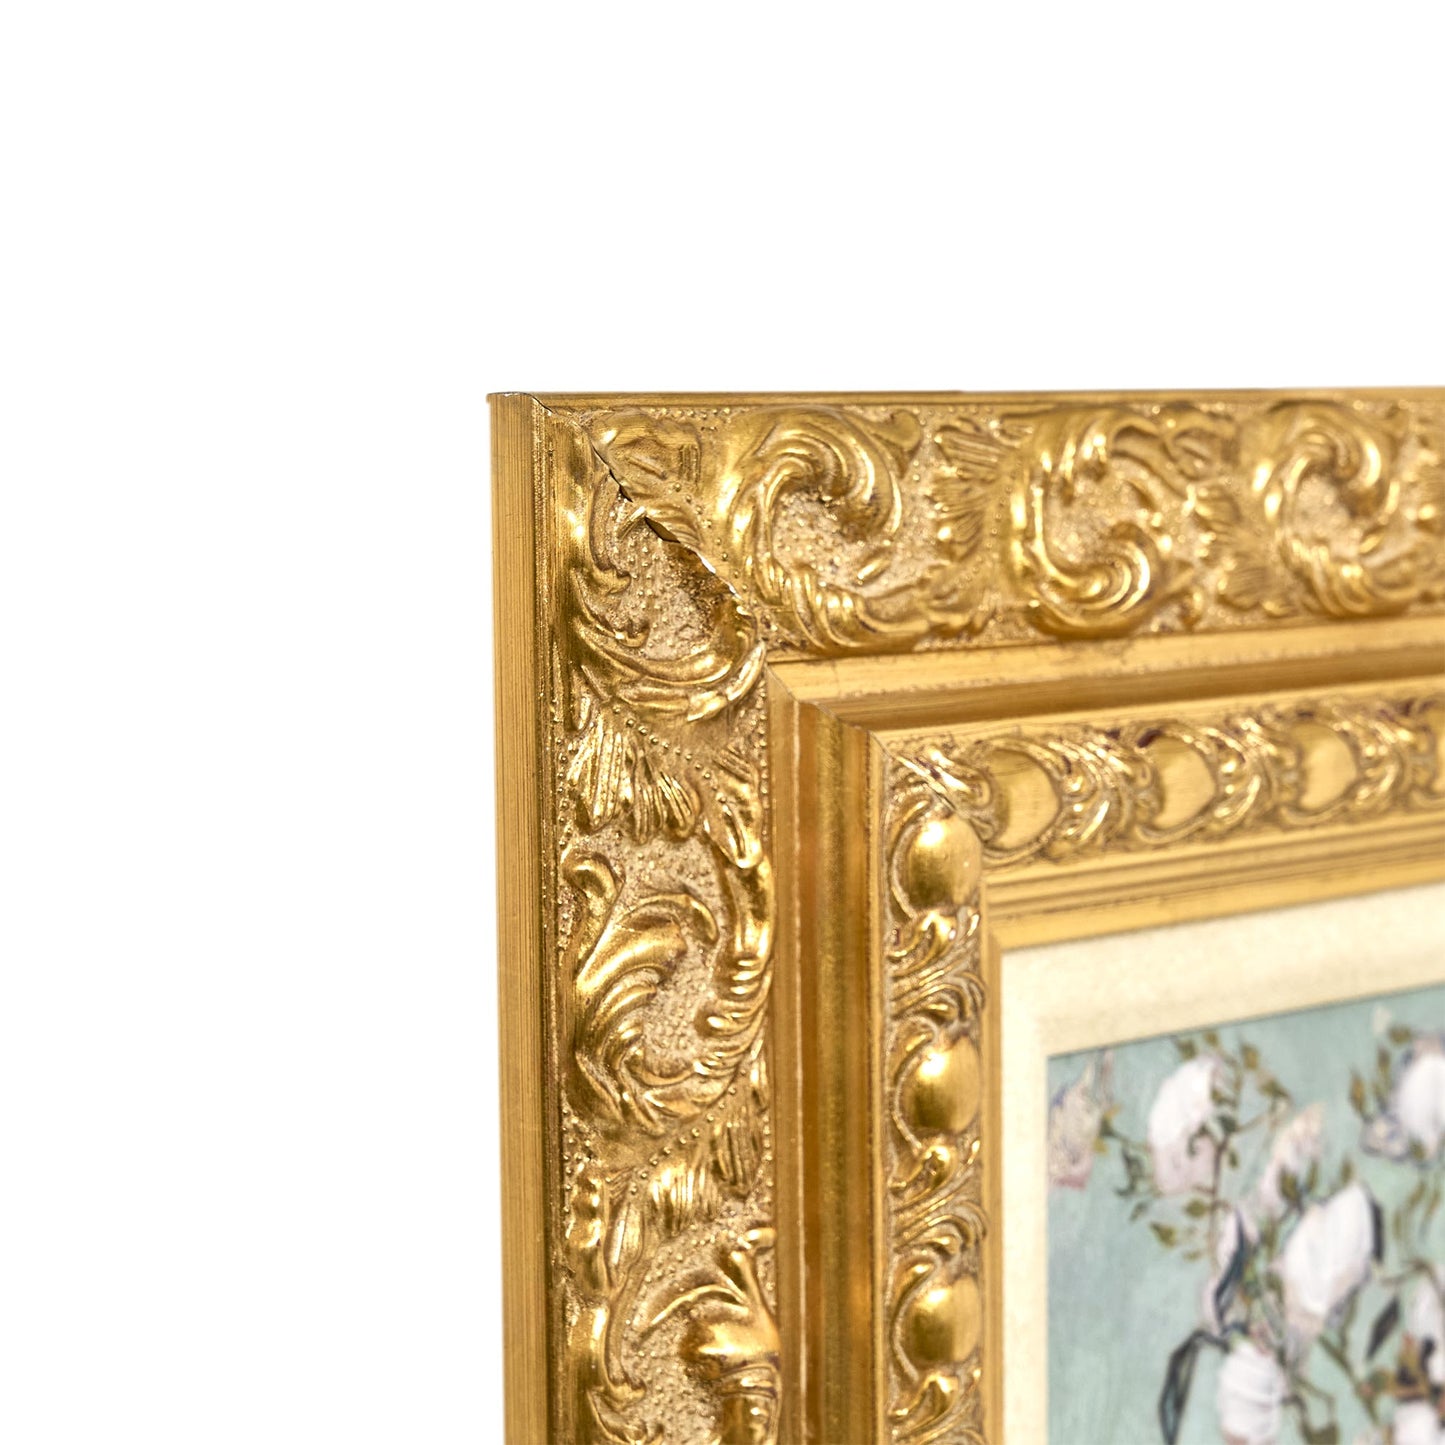 Ornate Framed Roses Canvas Print by Vincent van Gogh 15.25" x 17.25"